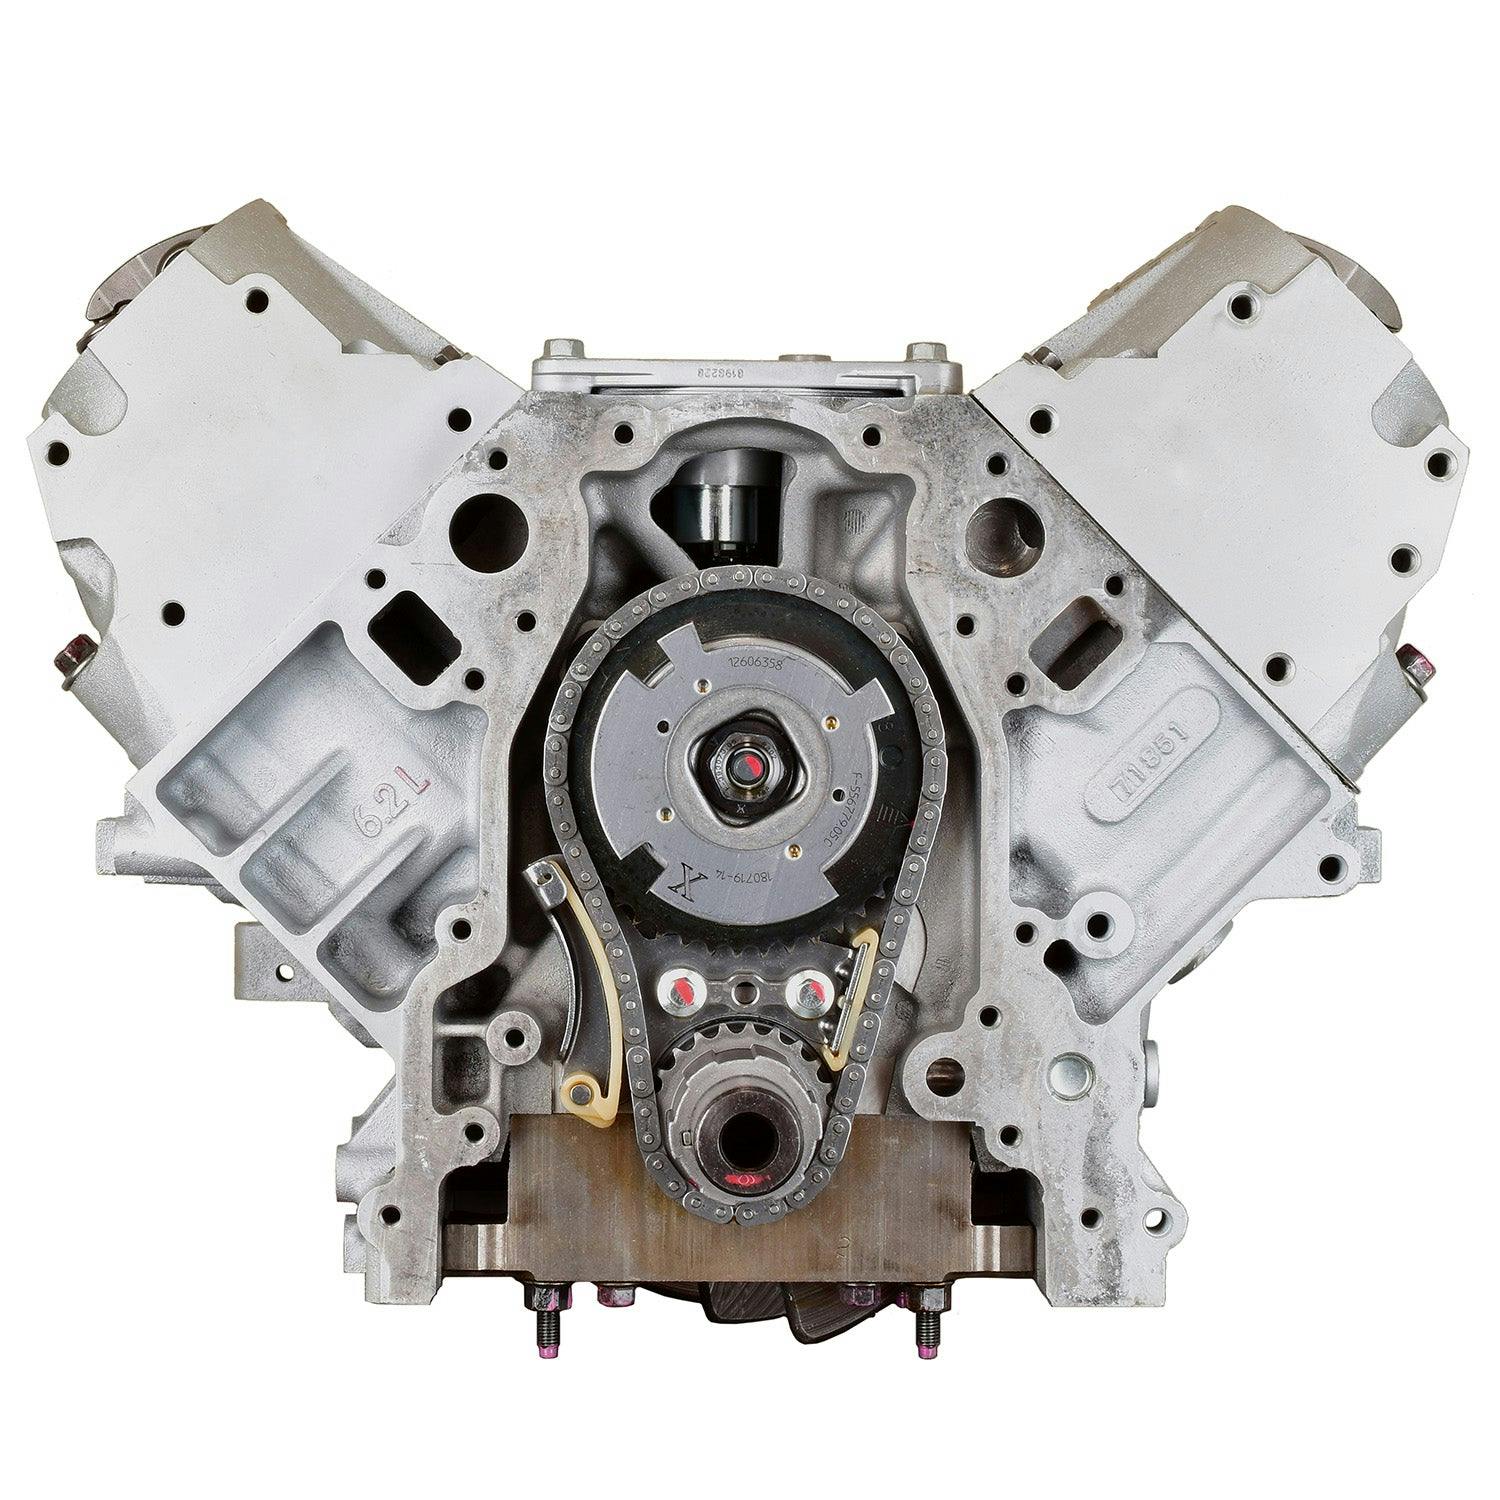 6.2L V8 Engine for 2010-2014 Cadillac Escalade, Escalade ESV, Escalade EXT/GMC Yukon, Yukon XL 1500